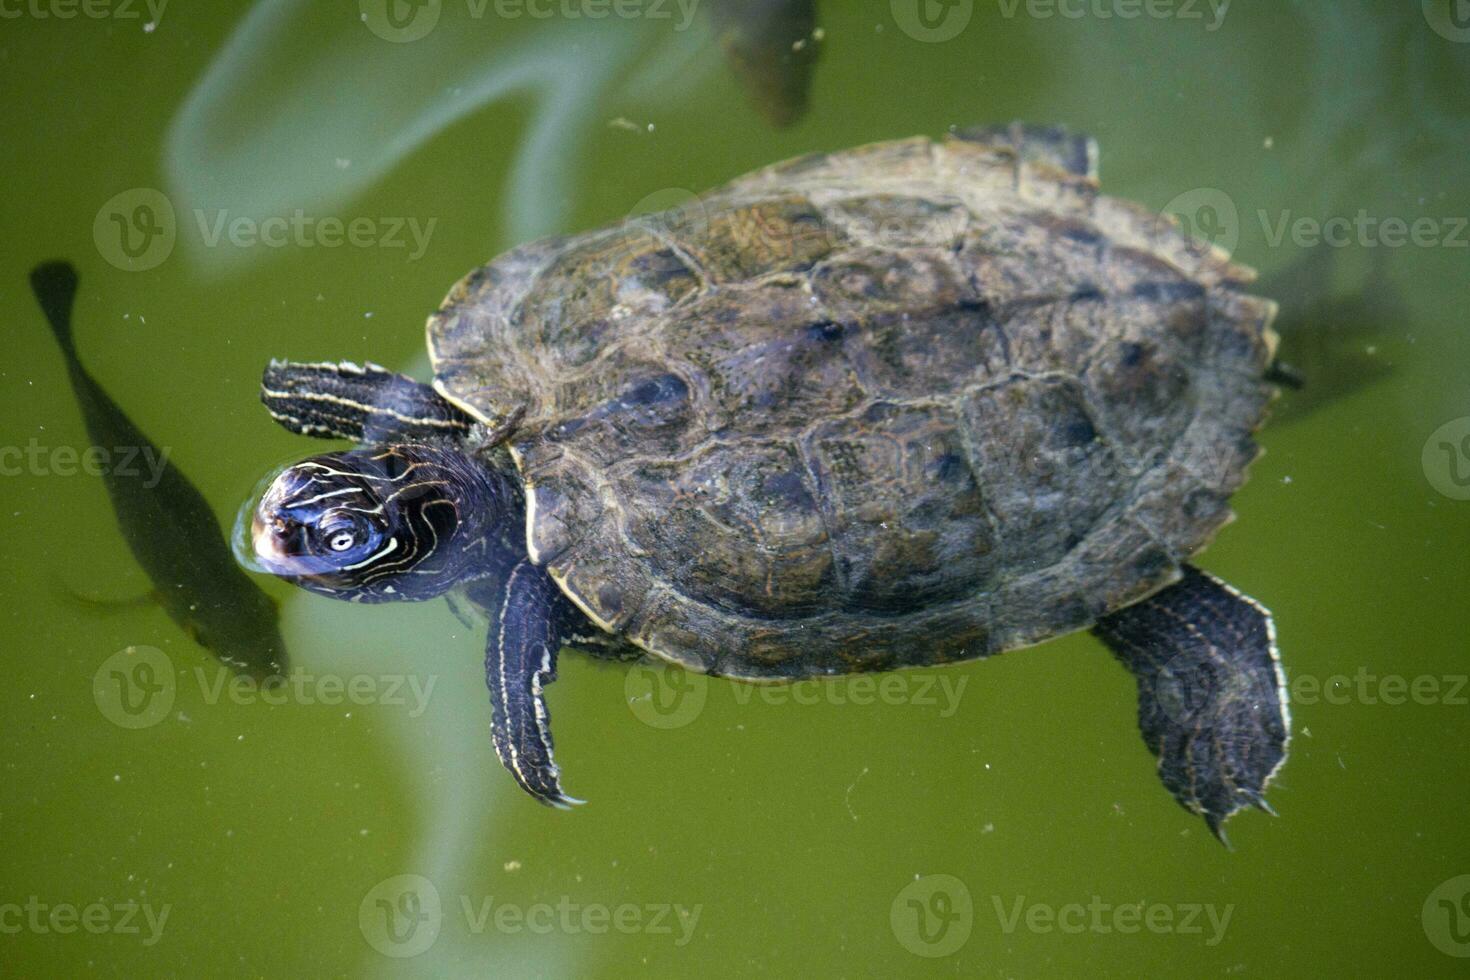 Yellow-bellied slider turtle photo